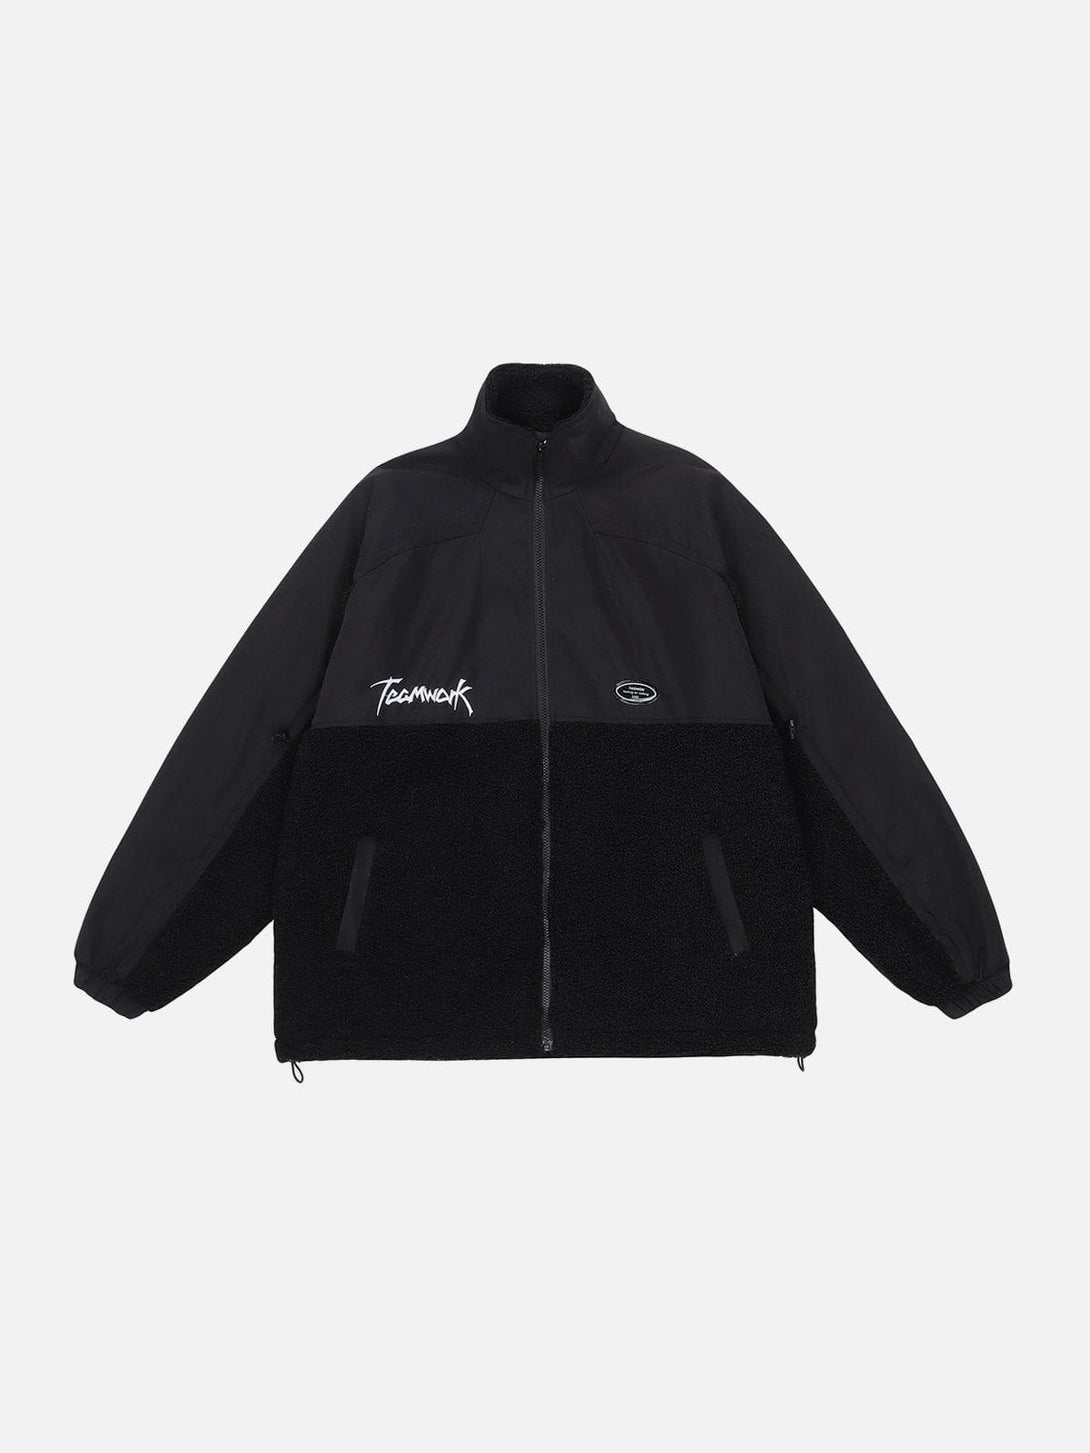 Majesda® - Patchwork Labeling Sherpa Jacket outfit ideas, streetwear fashion - majesda.com